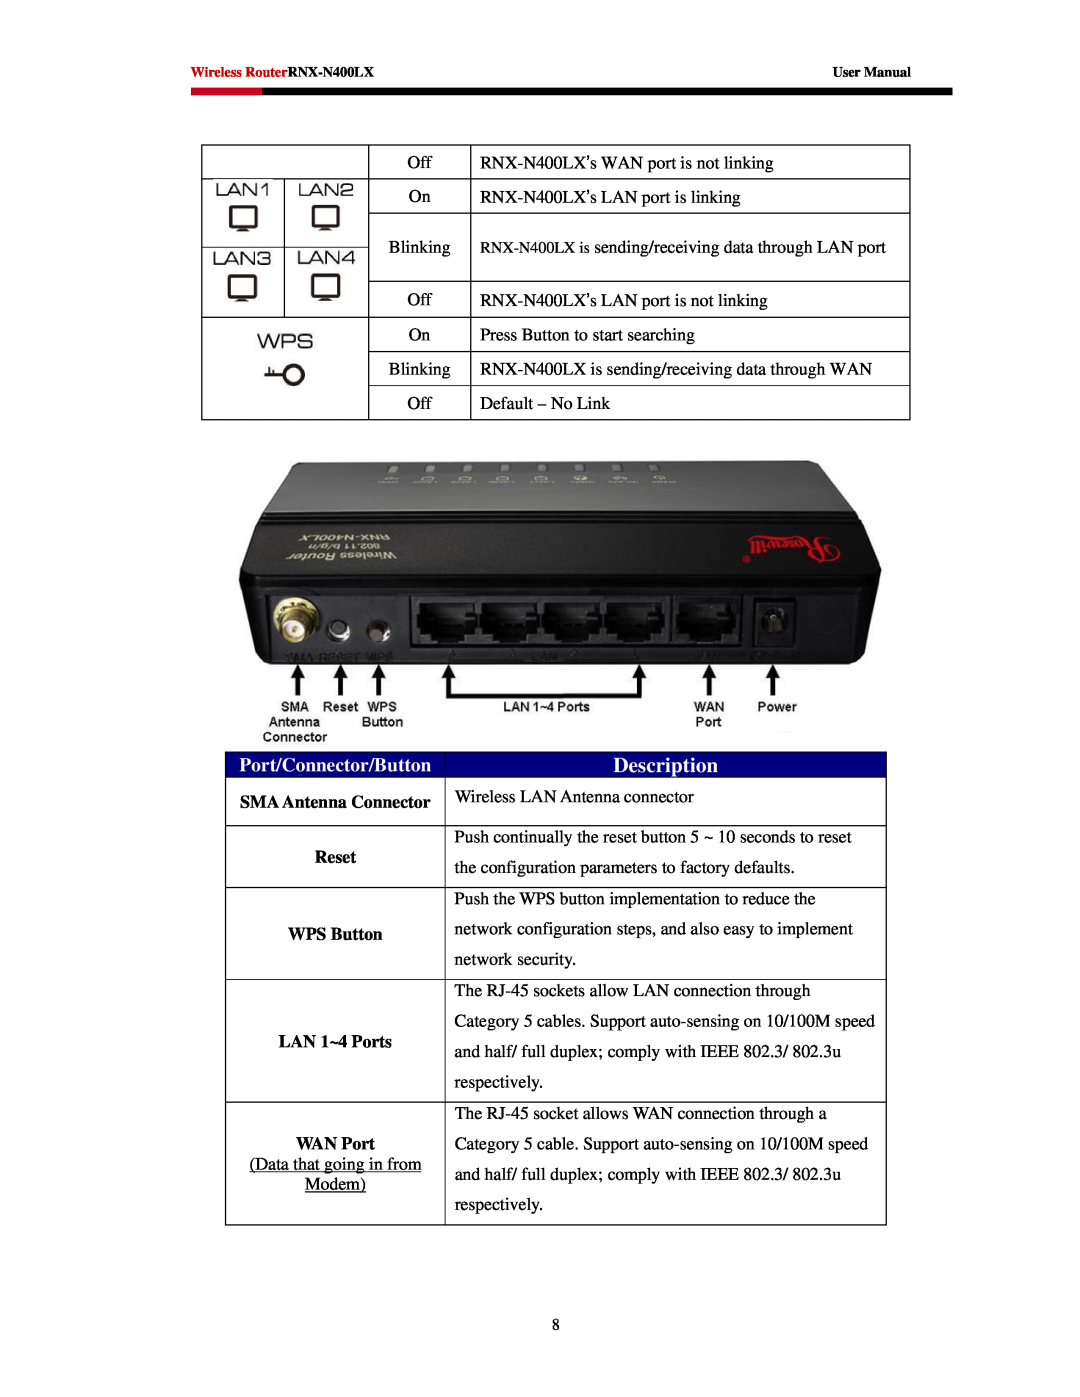 Rosewill RNX-N400LX Description, Port/Connector/Button, SMA Antenna Connector, Reset, WPS Button, LAN 1~4 Ports, WAN Port 